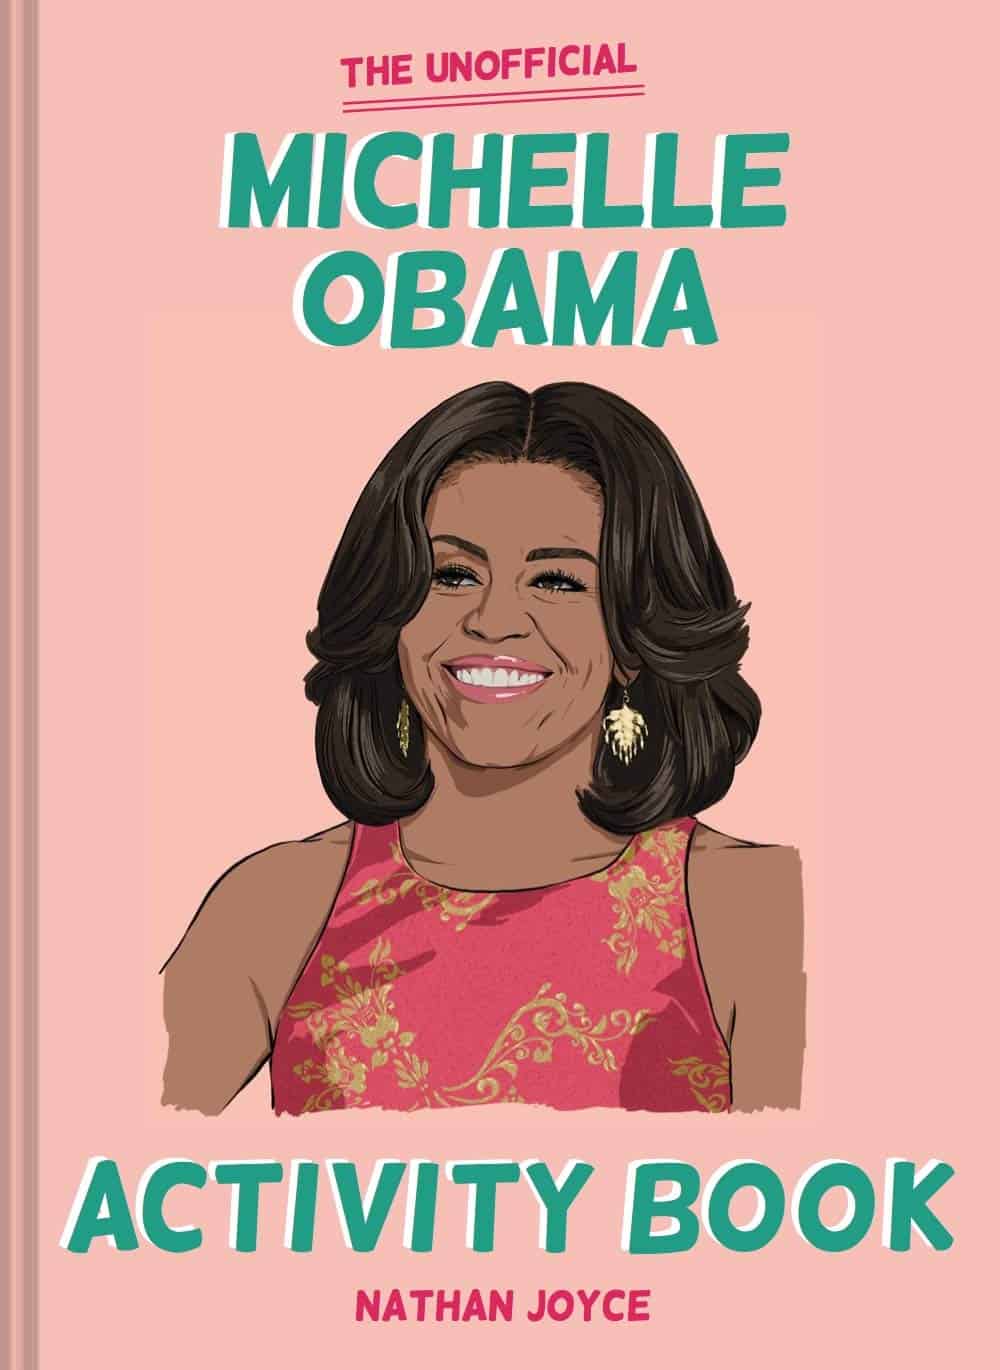 The Michelle Obama Activity Book